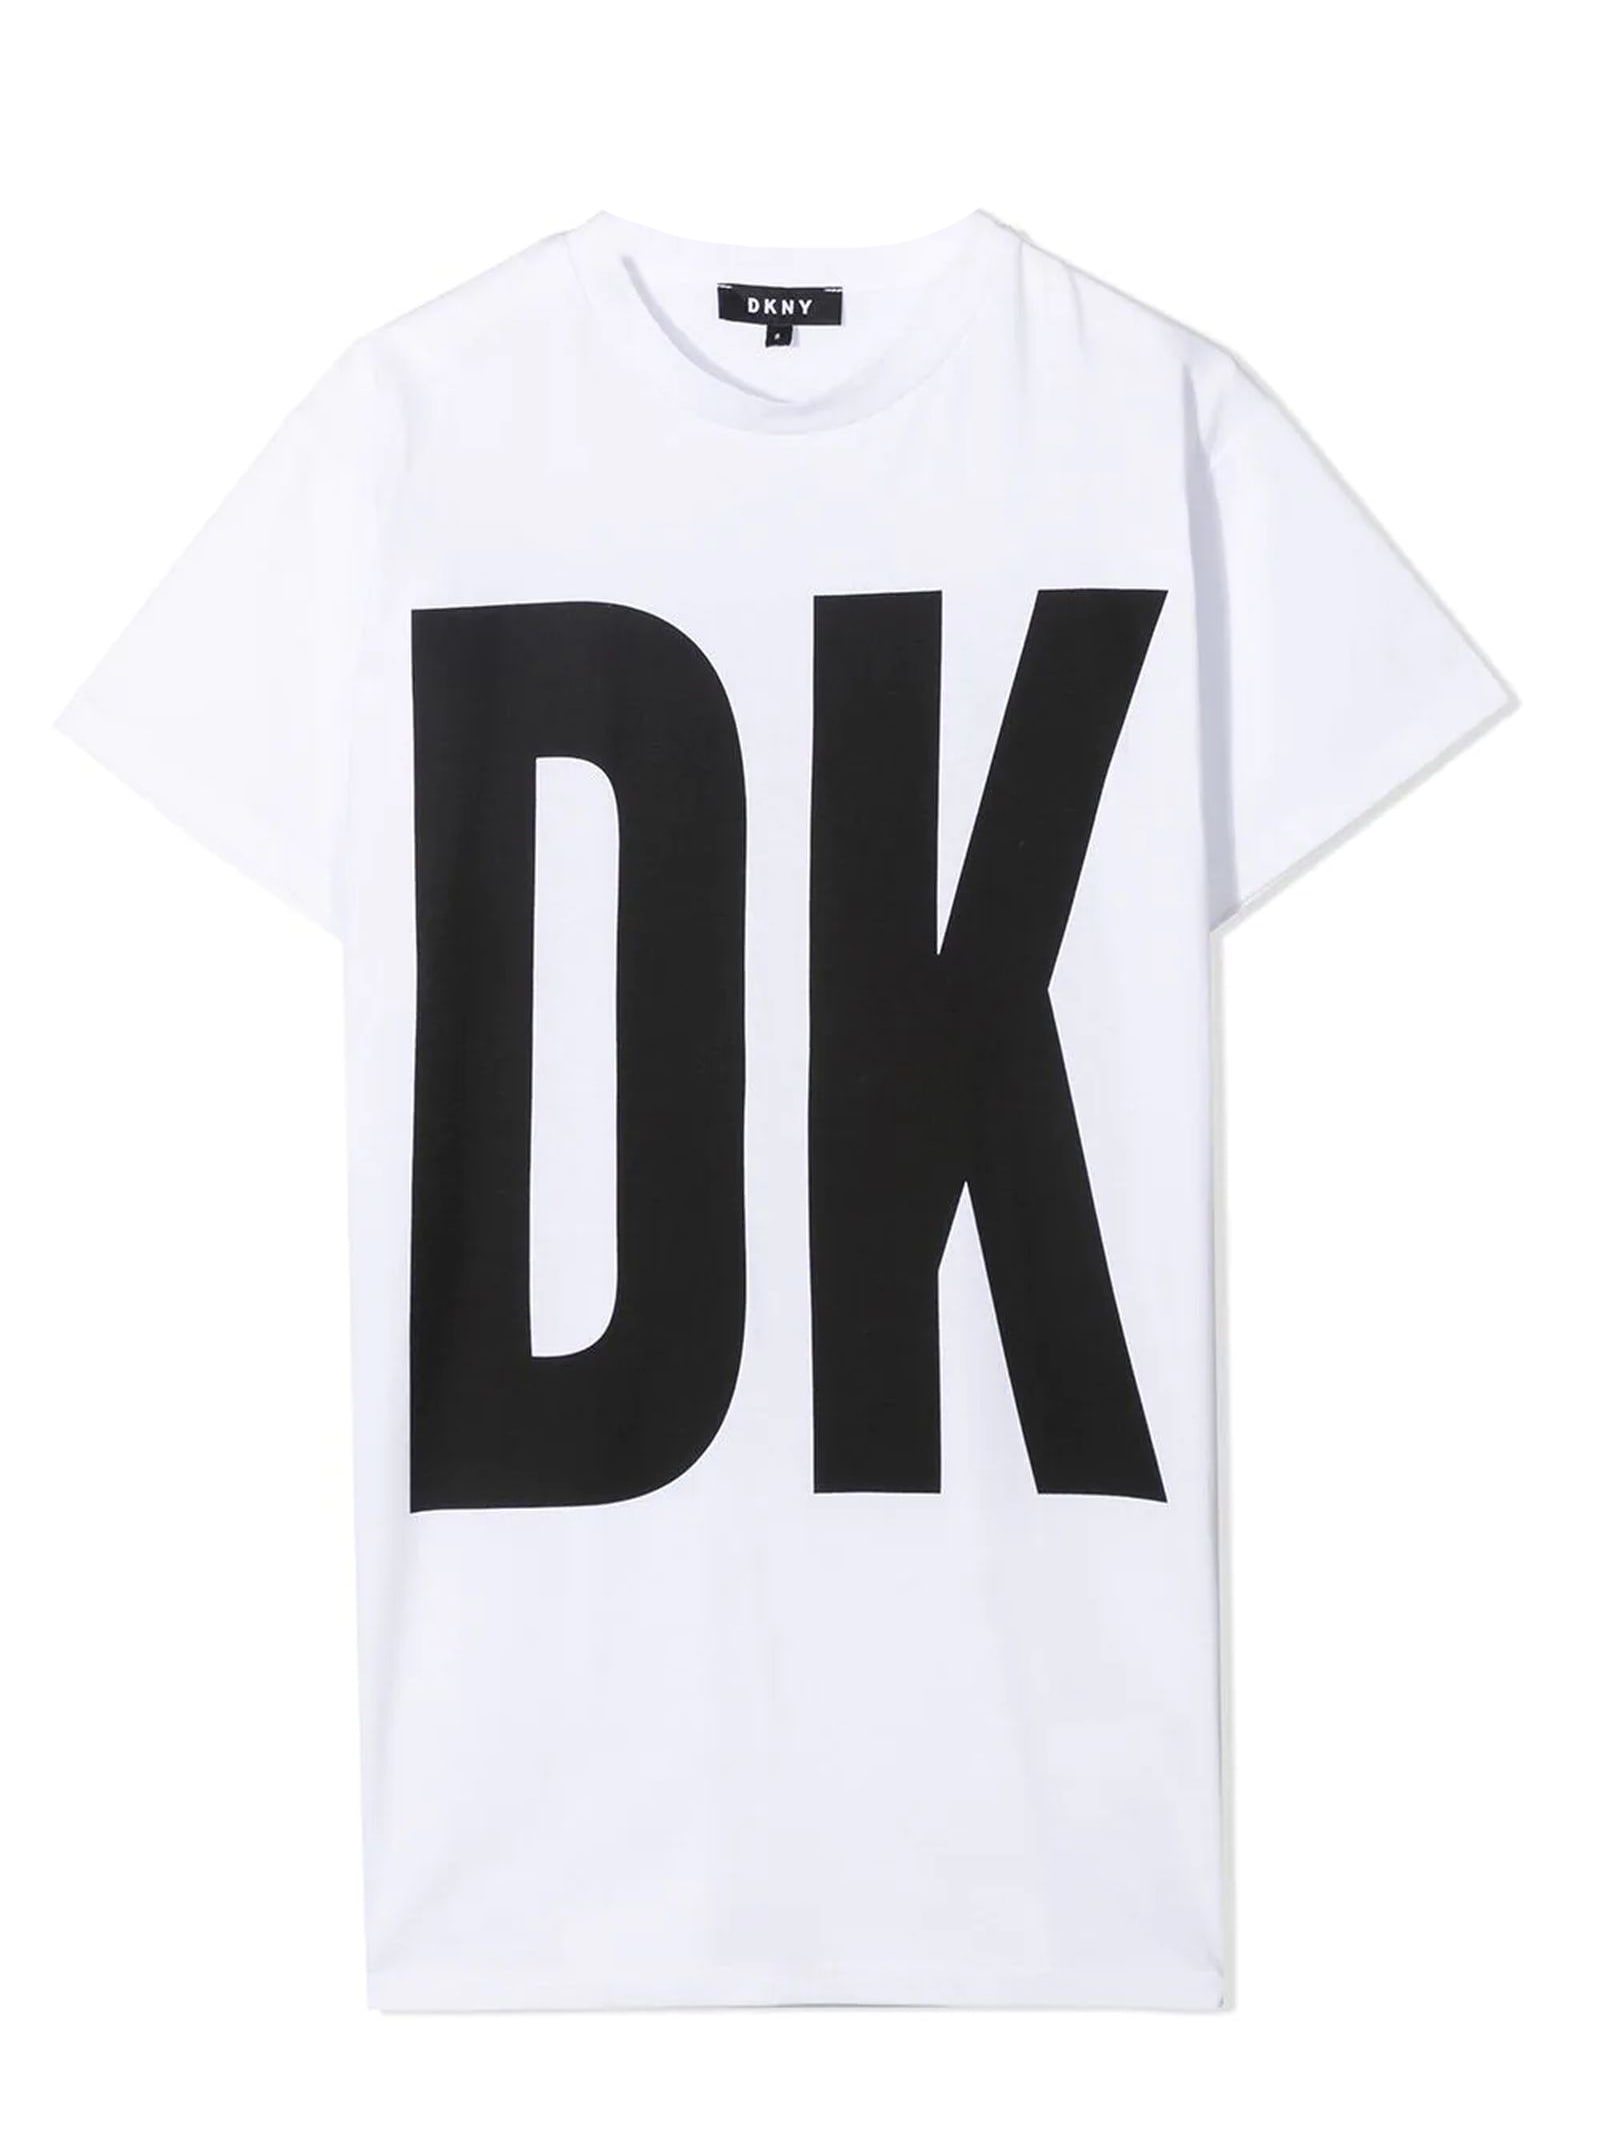 DKNY White Cotton T-shirt Dress